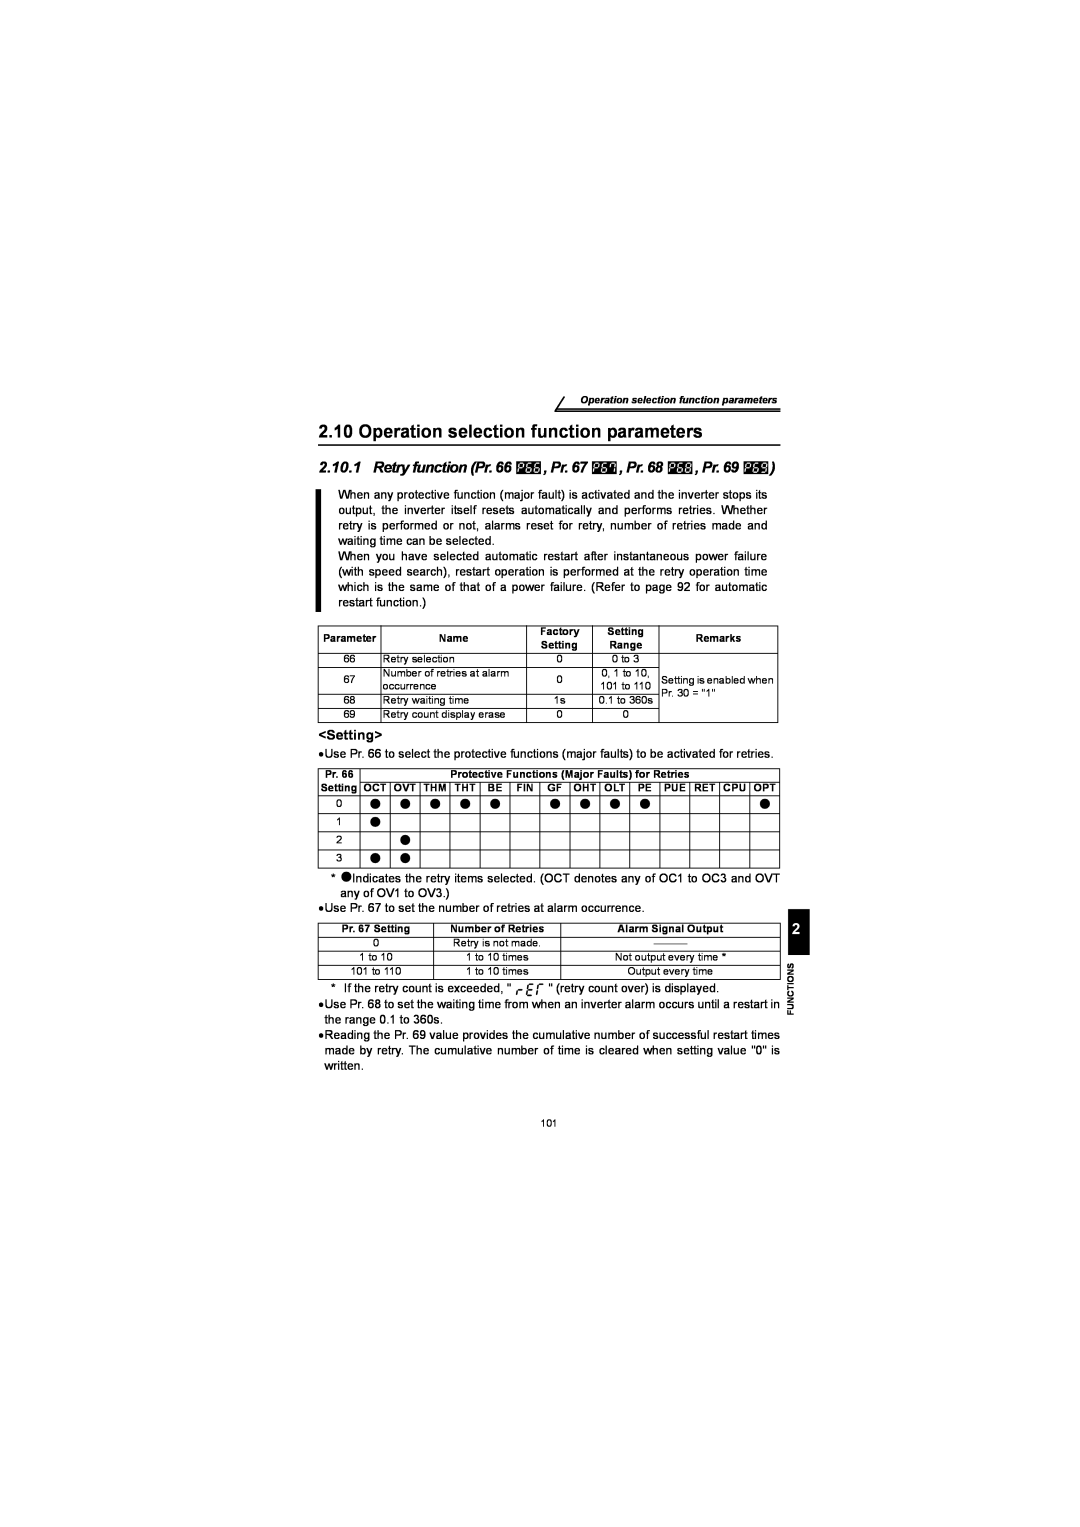 Mitsubishi Electronics FR-S500 Operation selection function parameters, Retry function Pr. 66 , Pr. 67 , Pr. 68 , Pr 